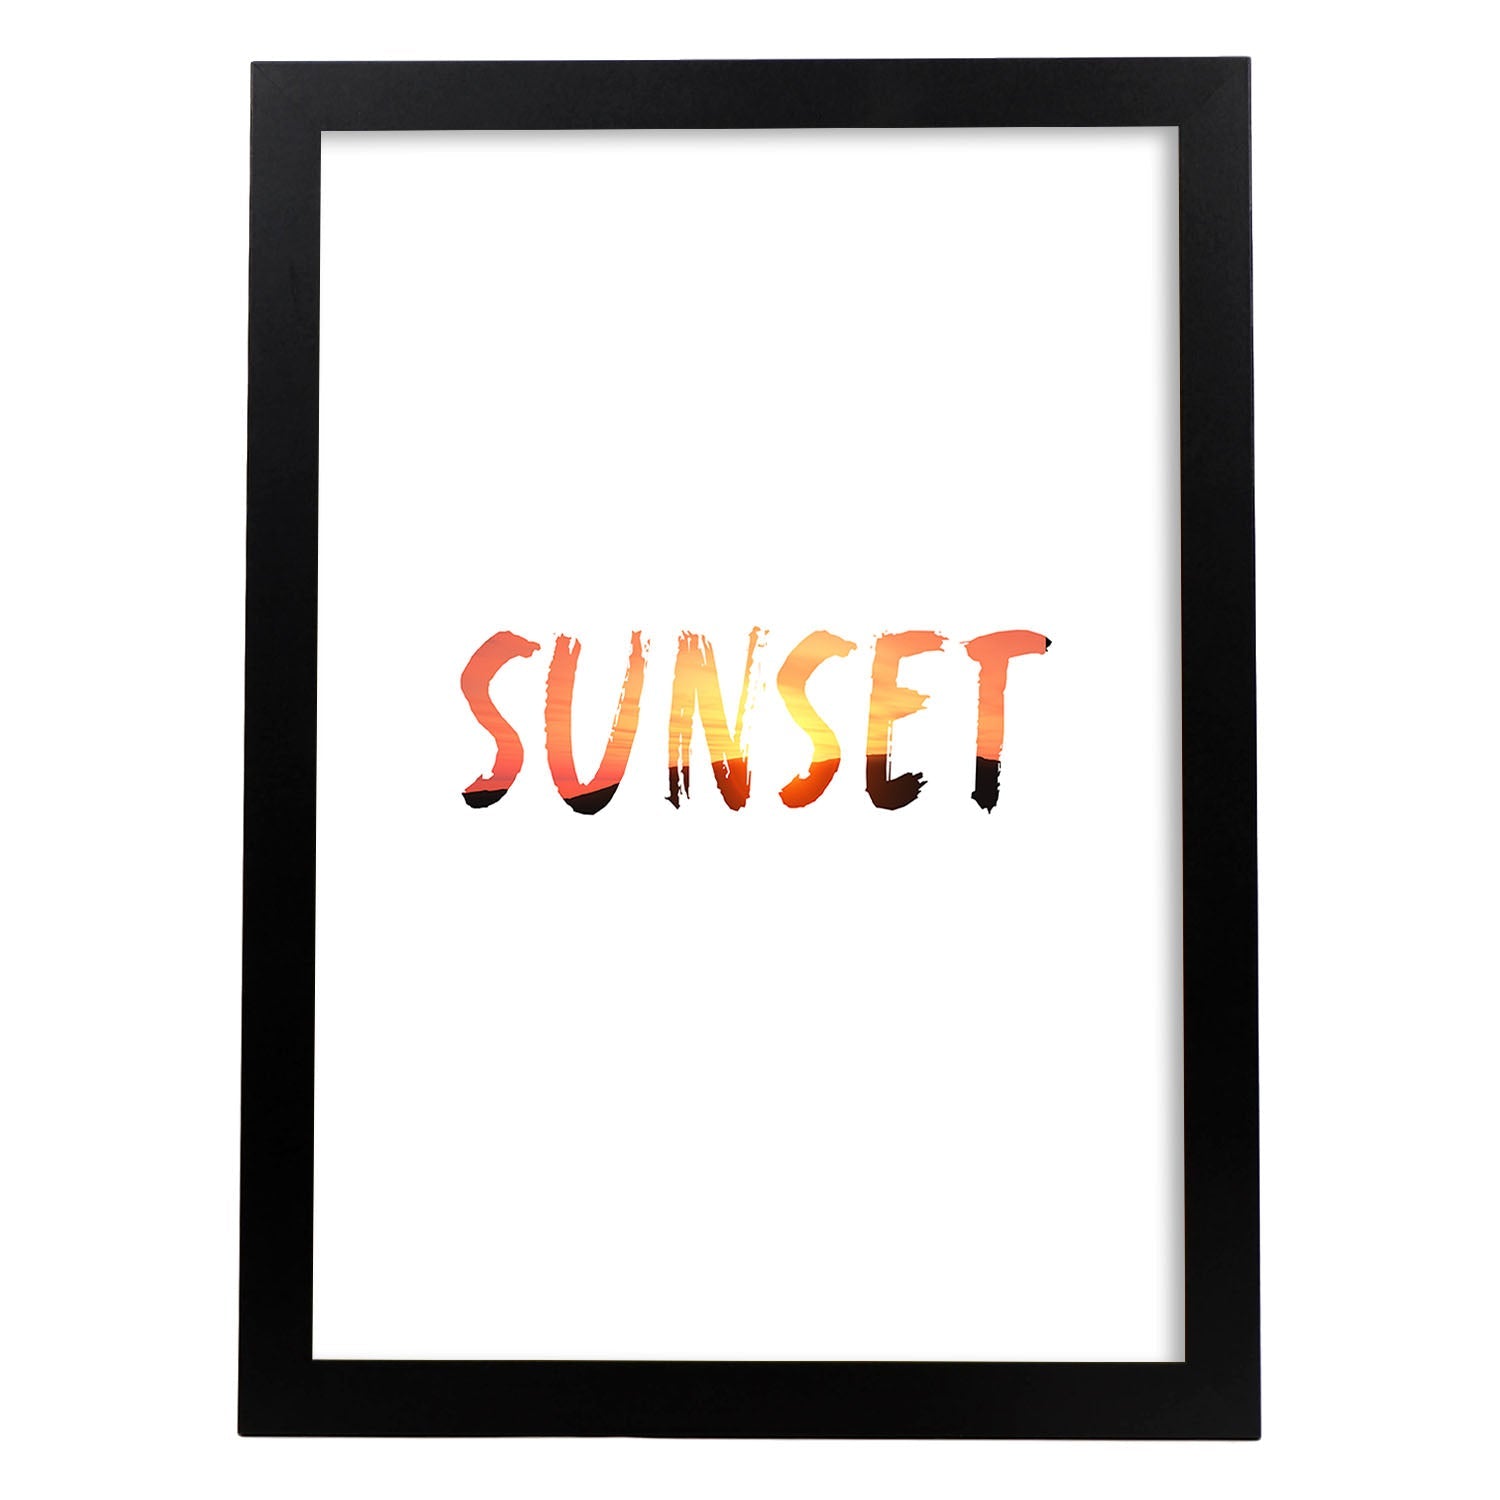 Lamina artistica decorativa con ilustración de sunset estilo Mensaje inspiracional-Artwork-Nacnic-A4-Marco Negro-Nacnic Estudio SL